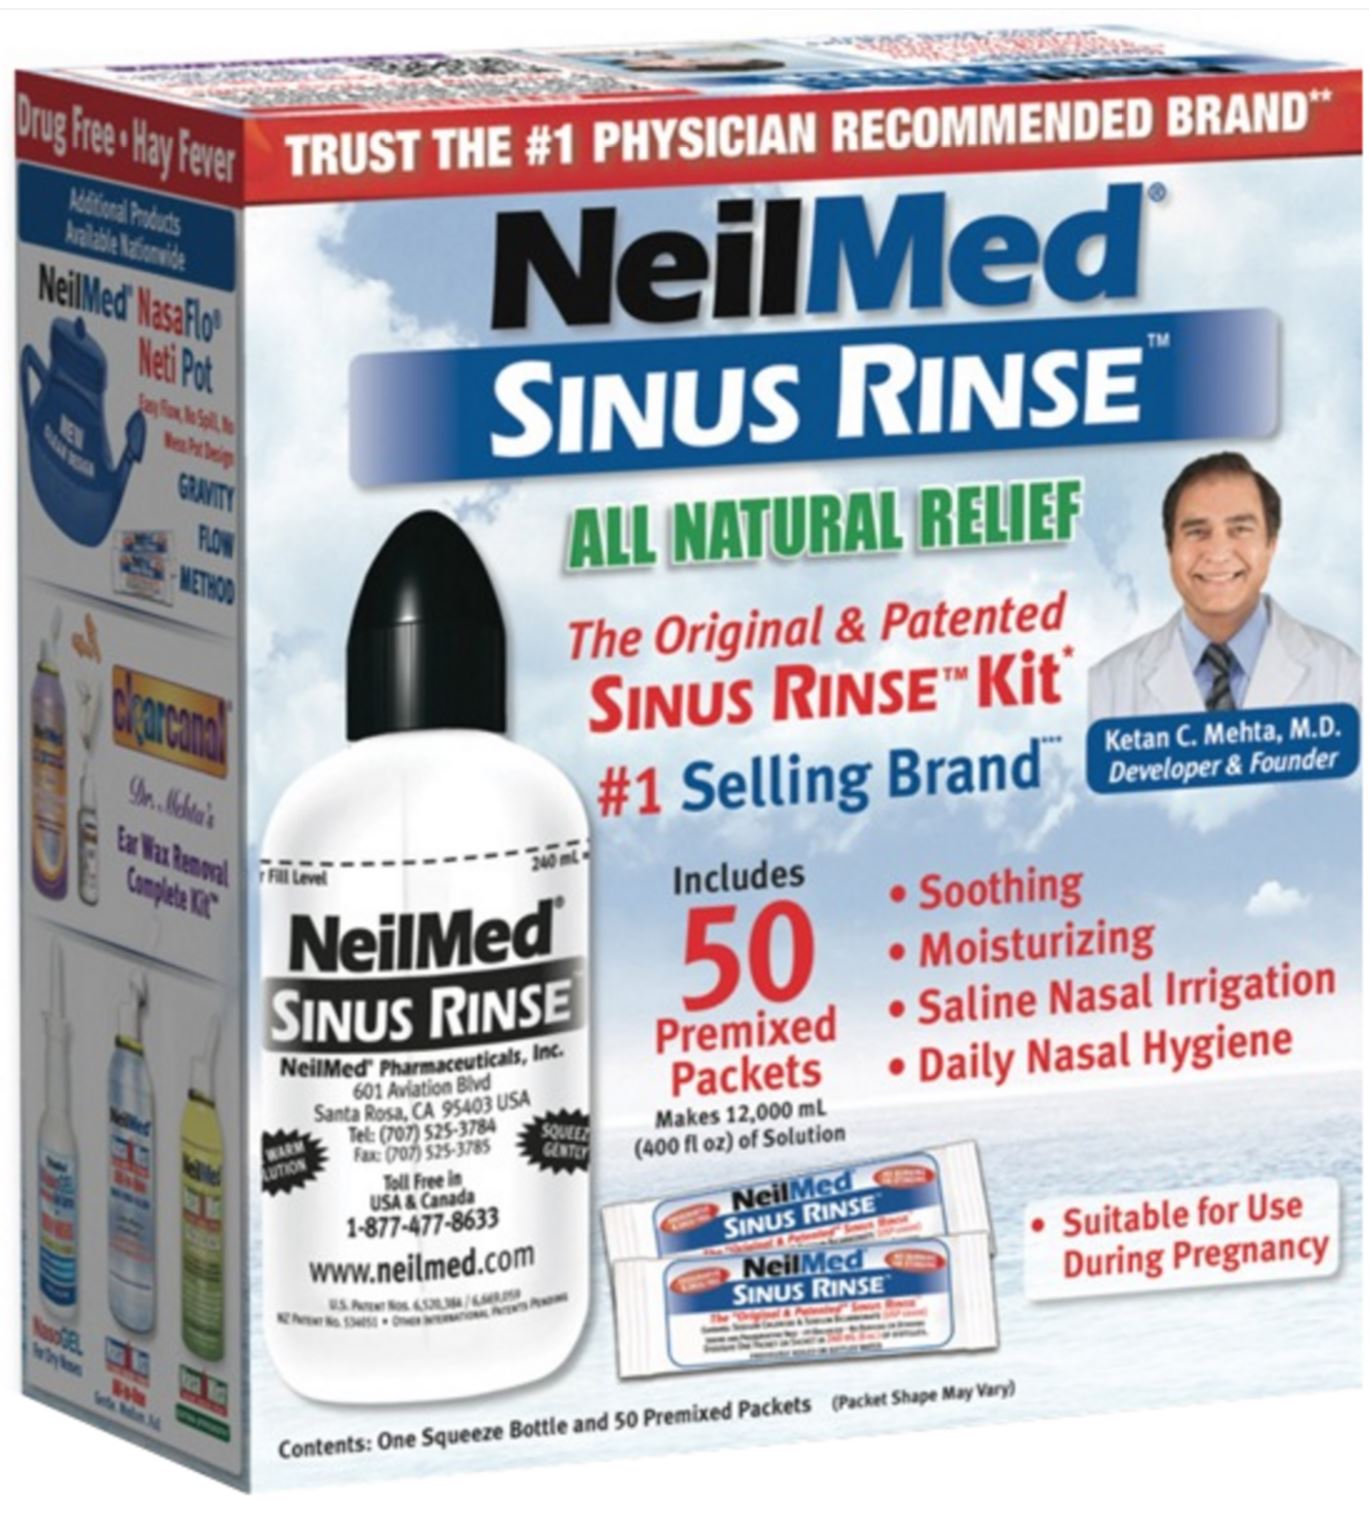 NeilMed Sinus Rinse for congestion during pregnancy